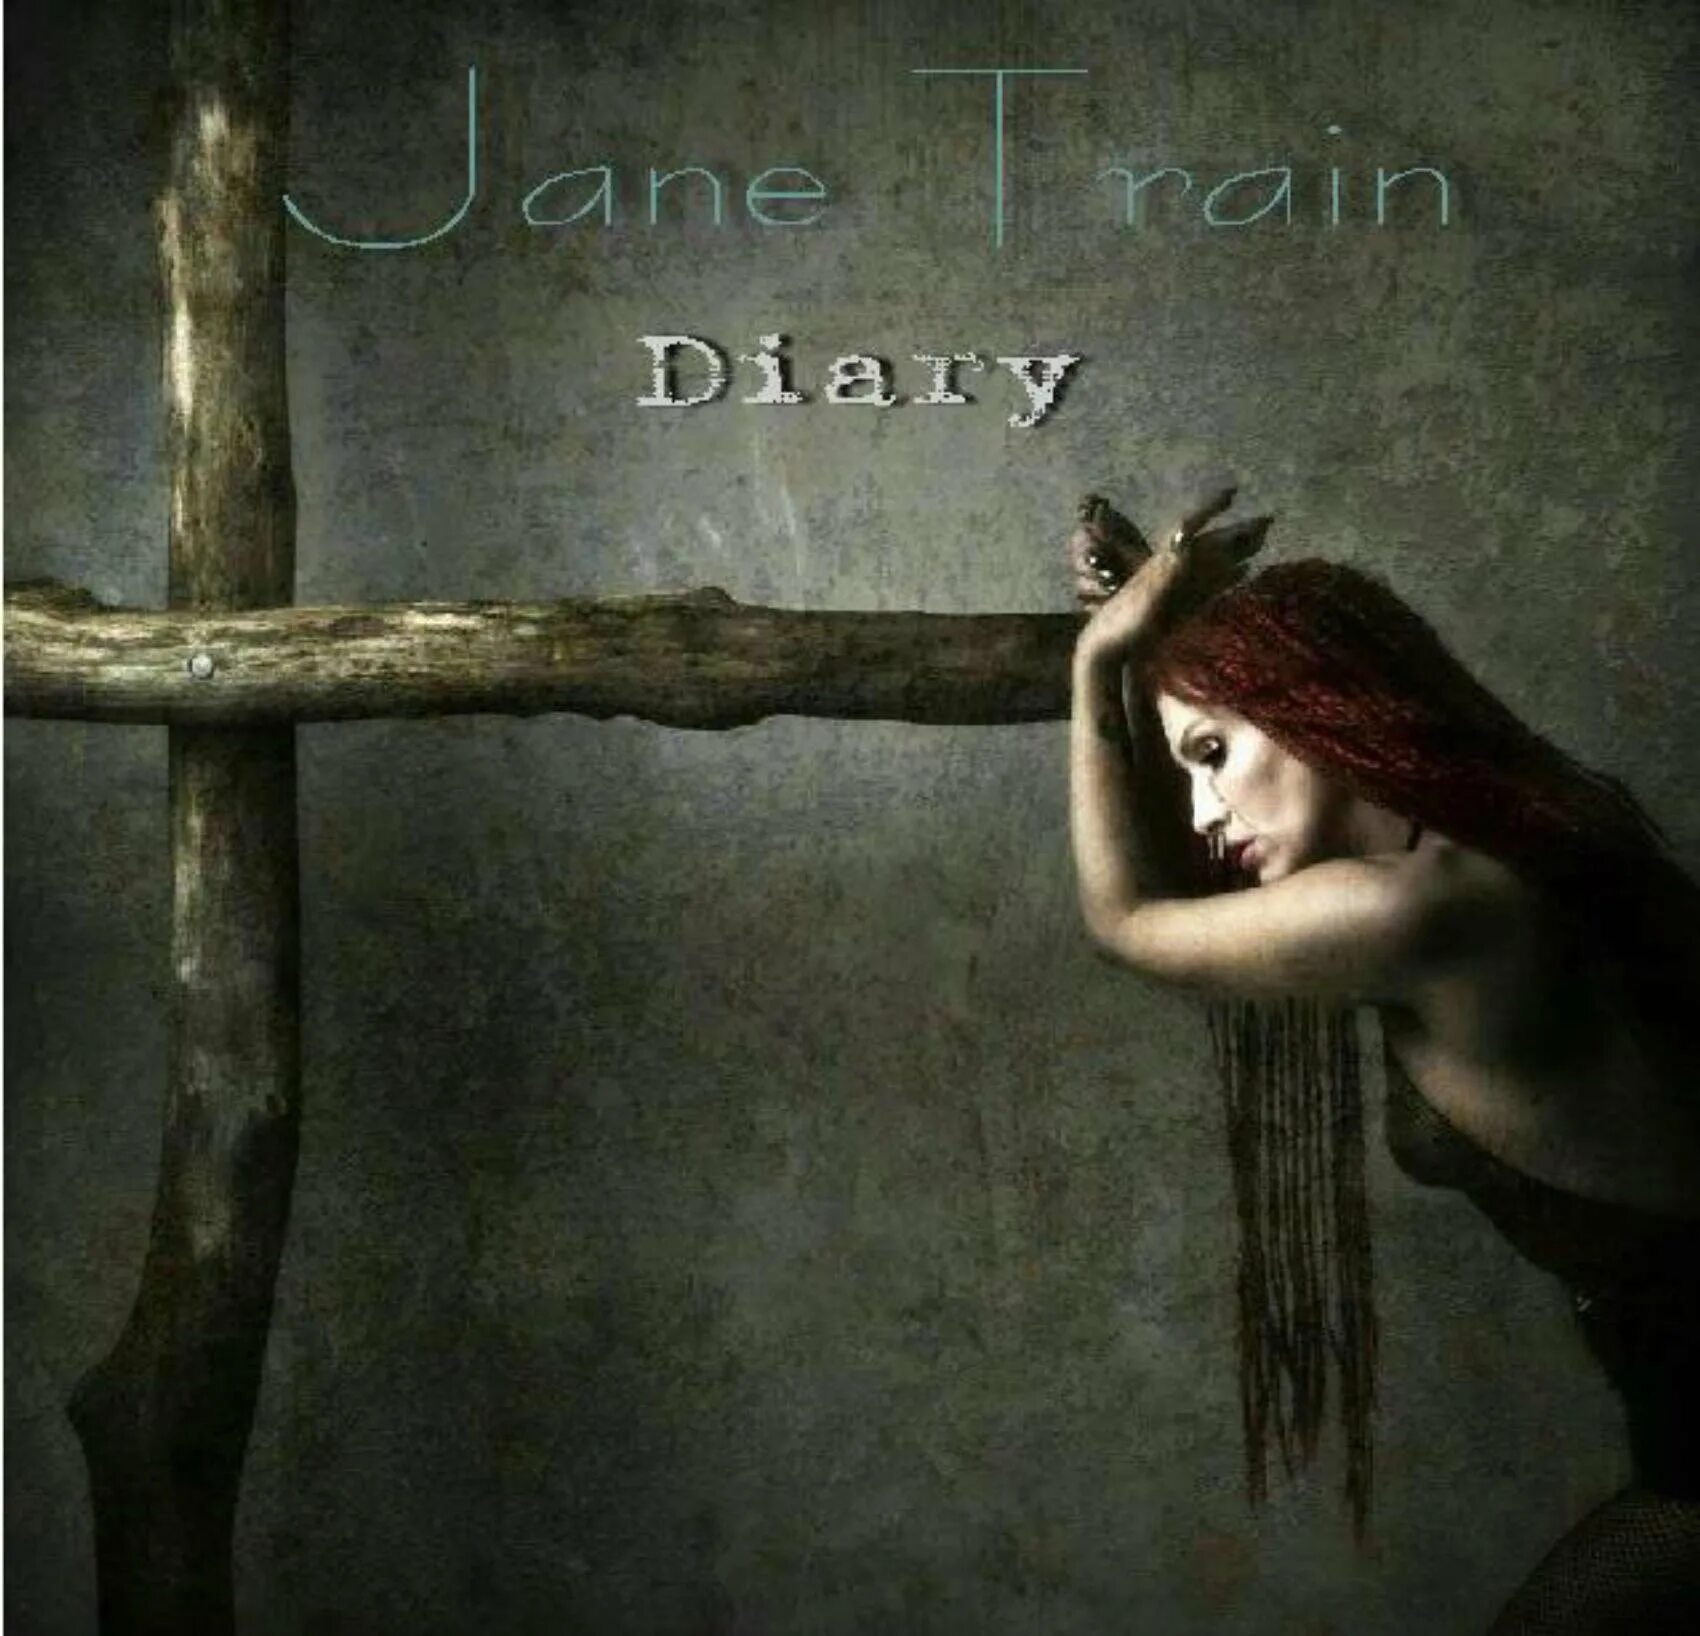 Diary of Jane. Breaking Benjamin - the Diary of Jane. Джейн трейн (Jane Train). Дайри Джейн Веда.